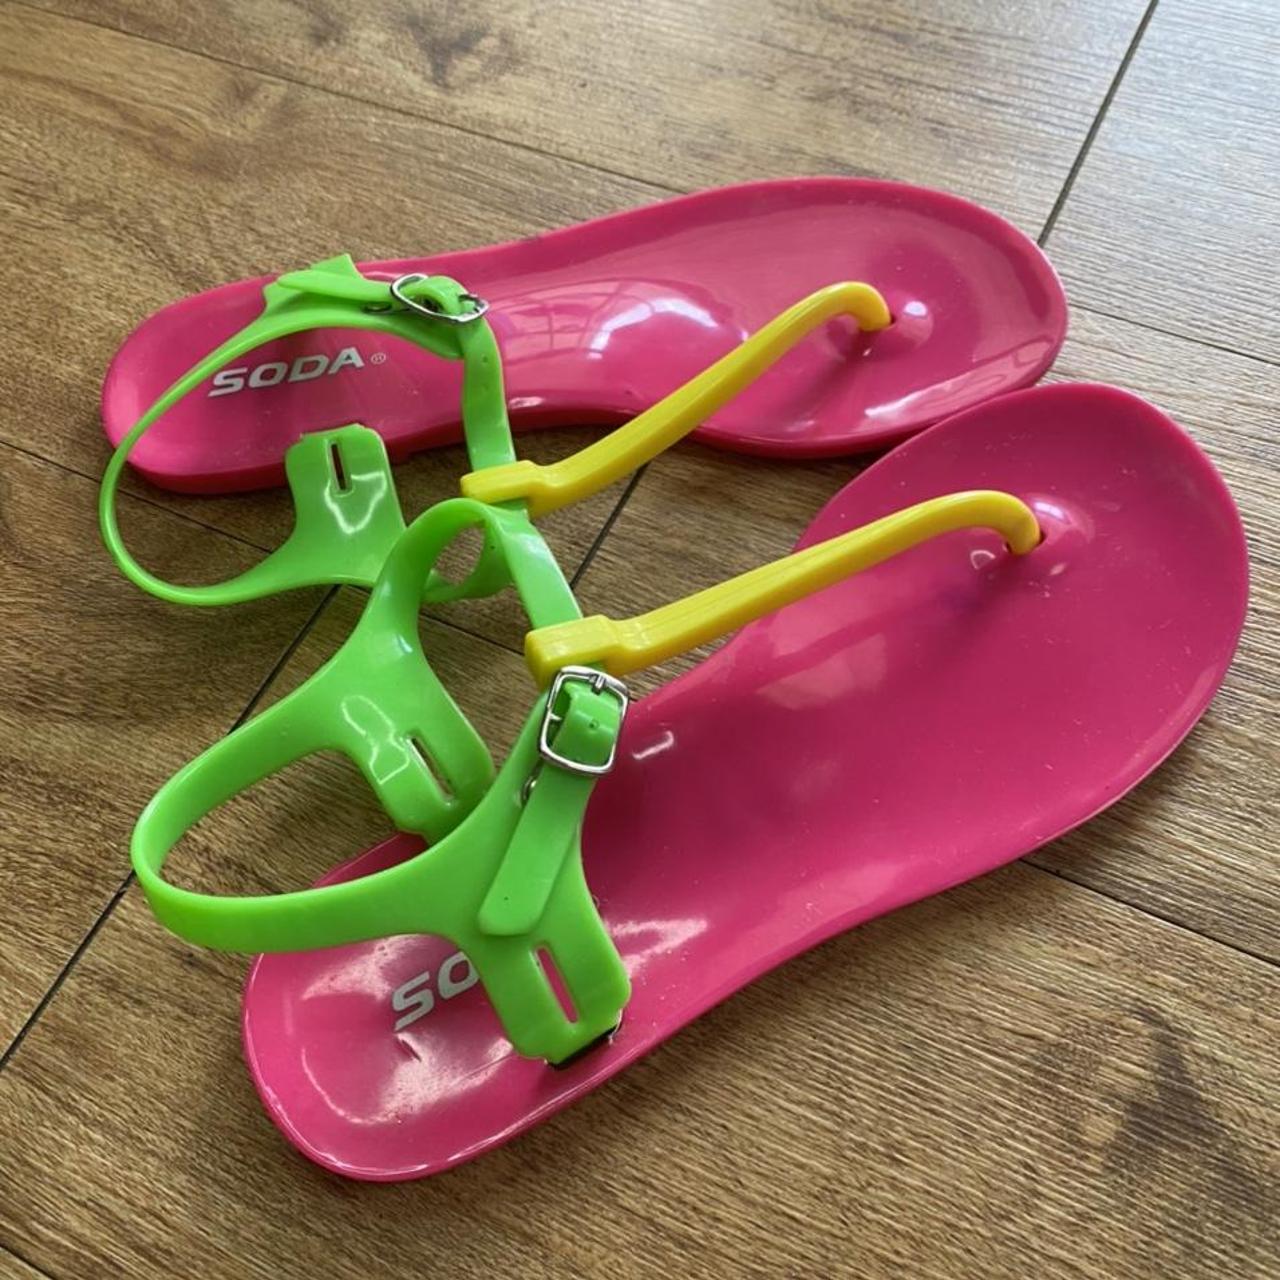 Product Image 2 - Multicolored Soda sandals